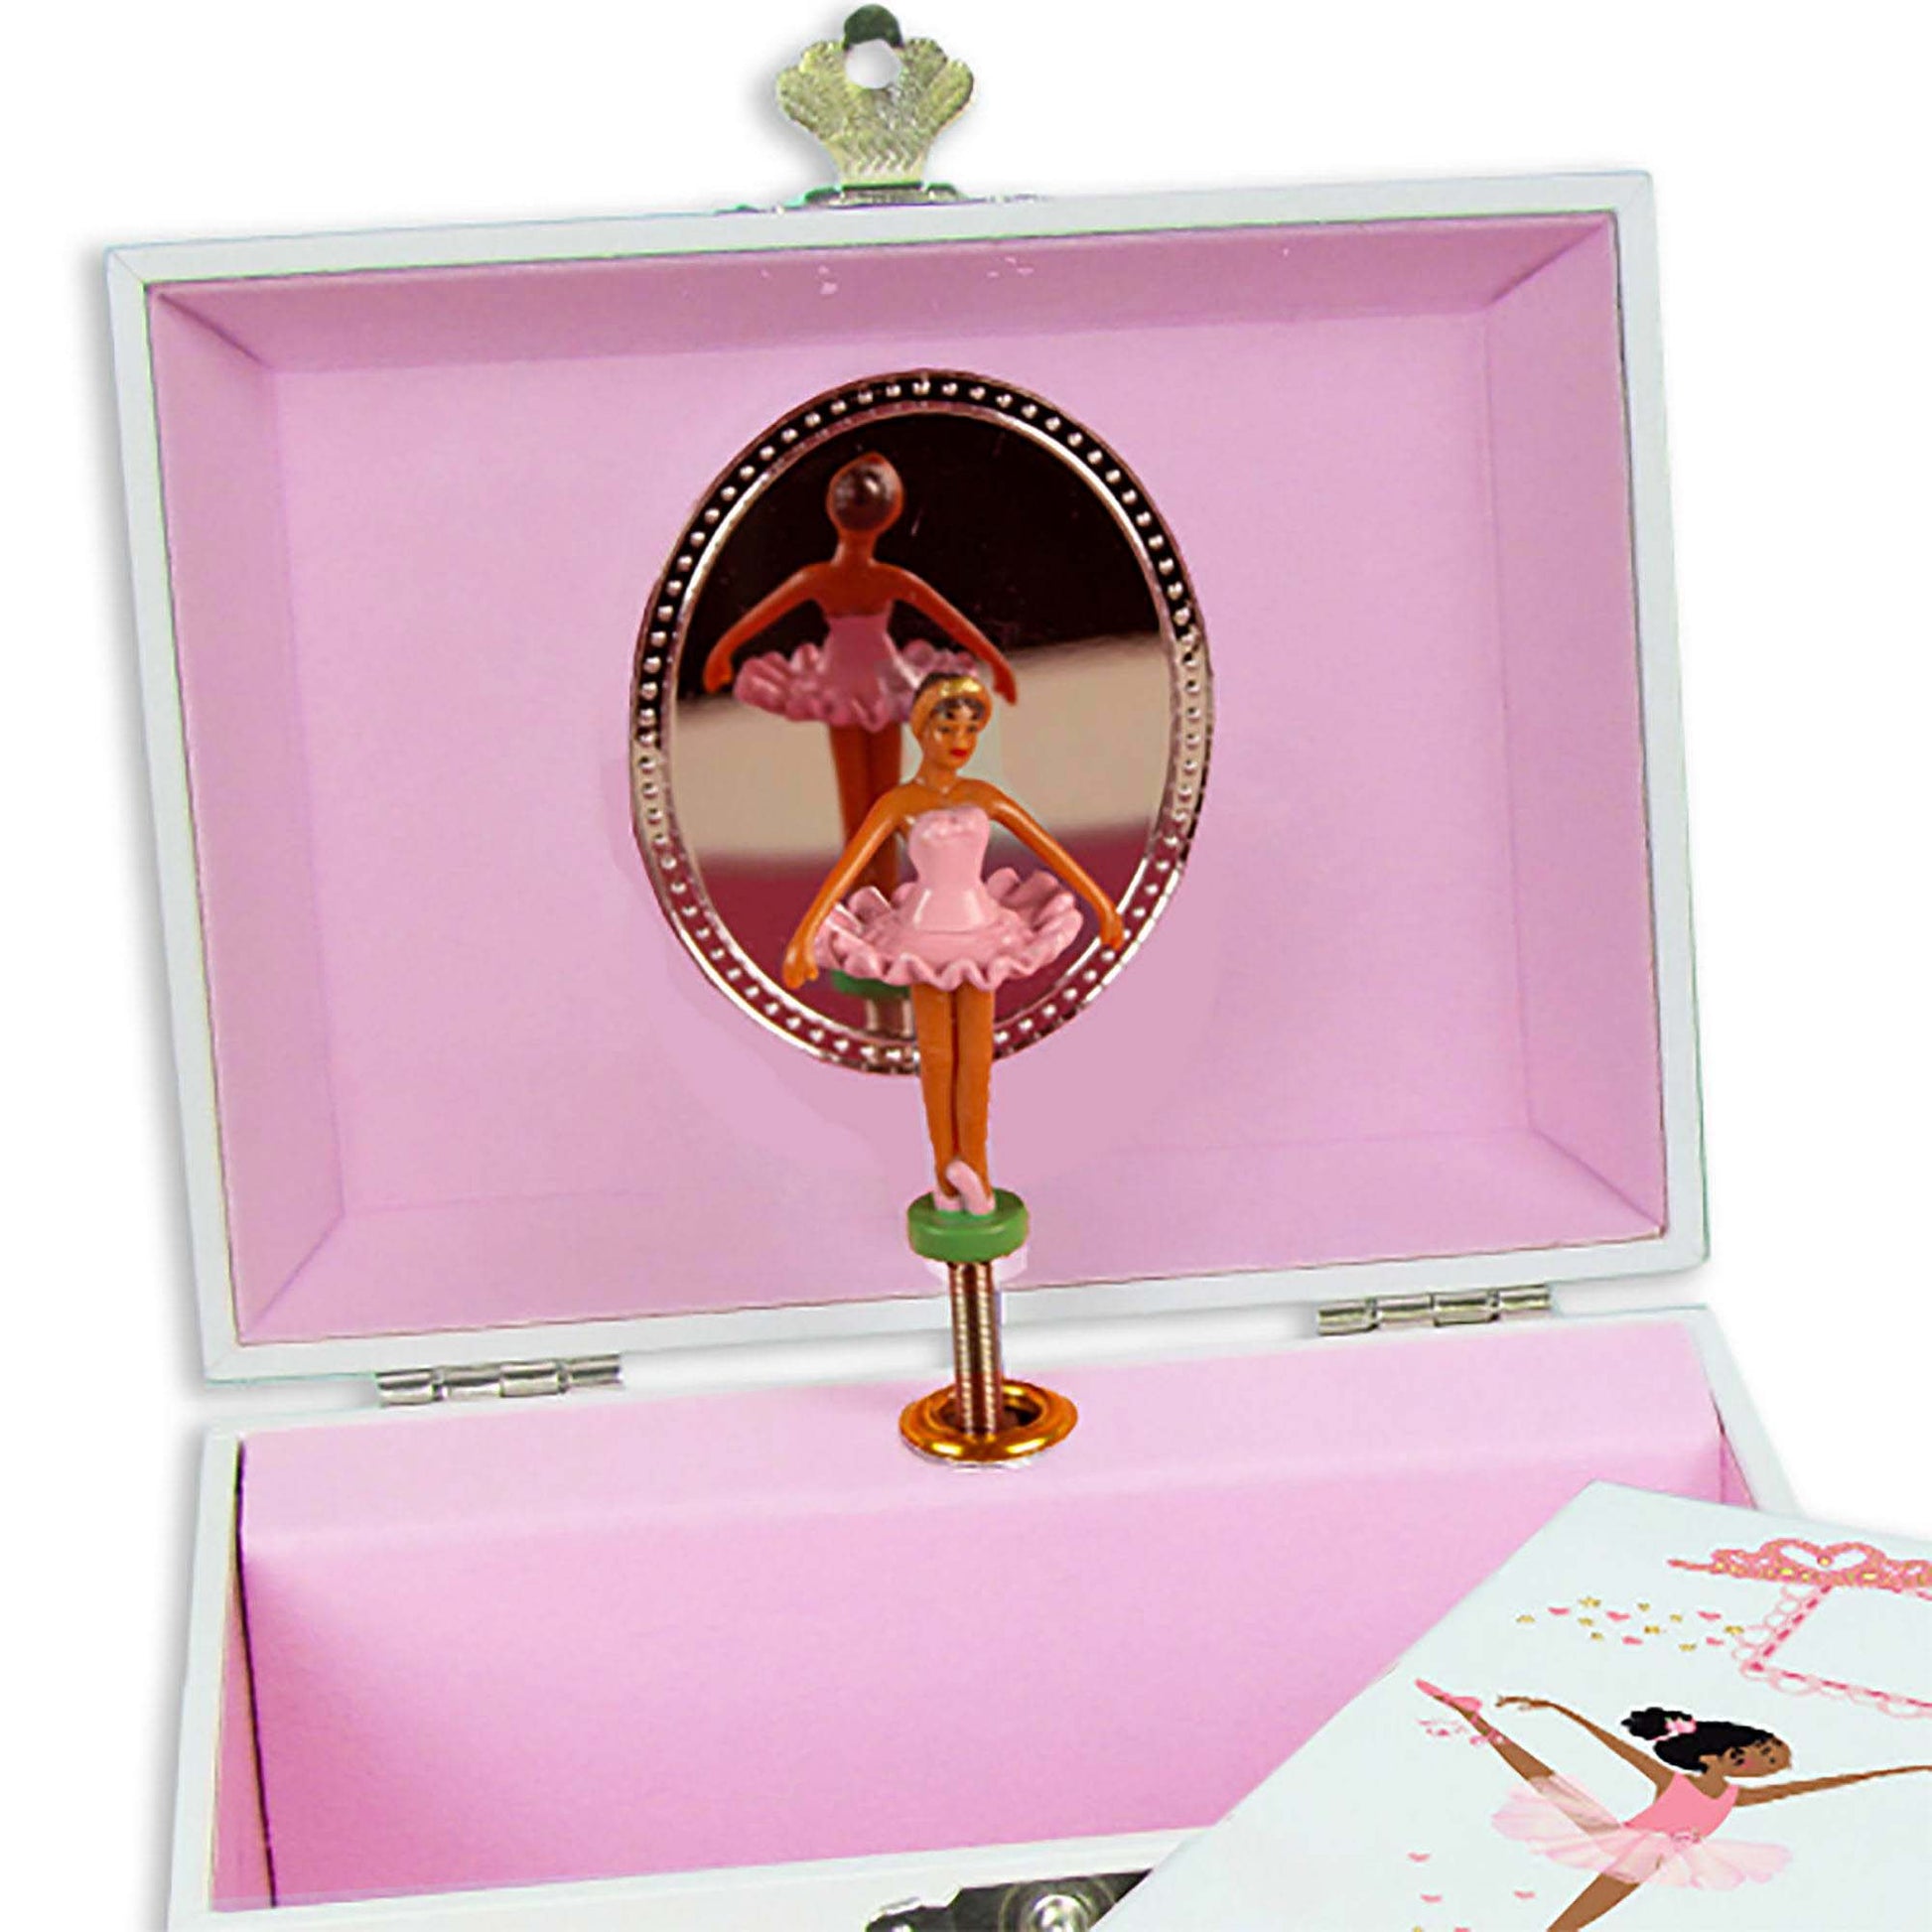 Personalized Ballerina Jewelry Box with Swim design